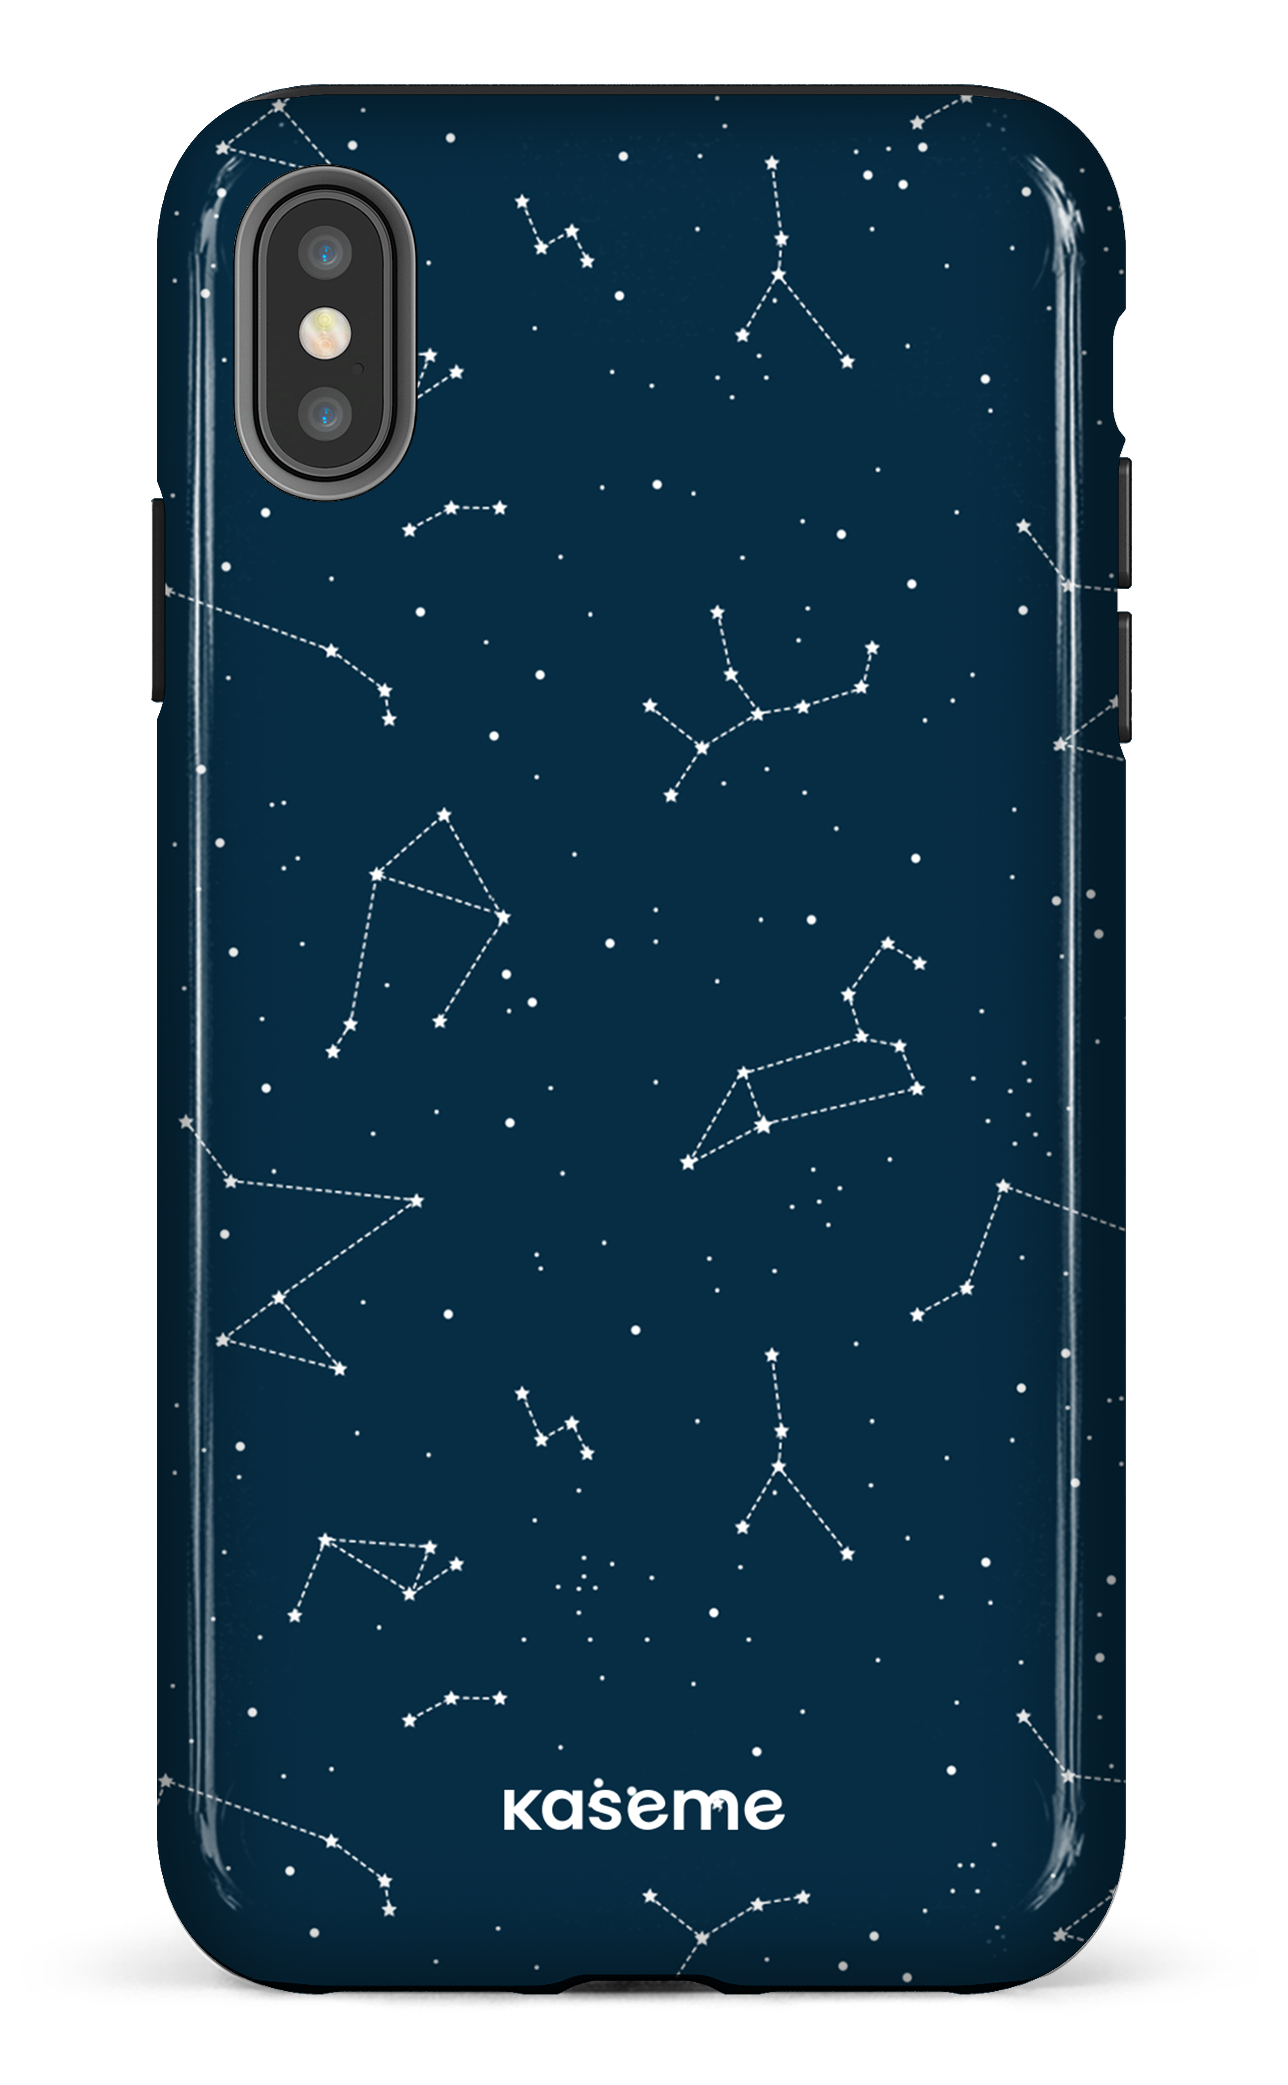 Cosmos - iPhone XS Max